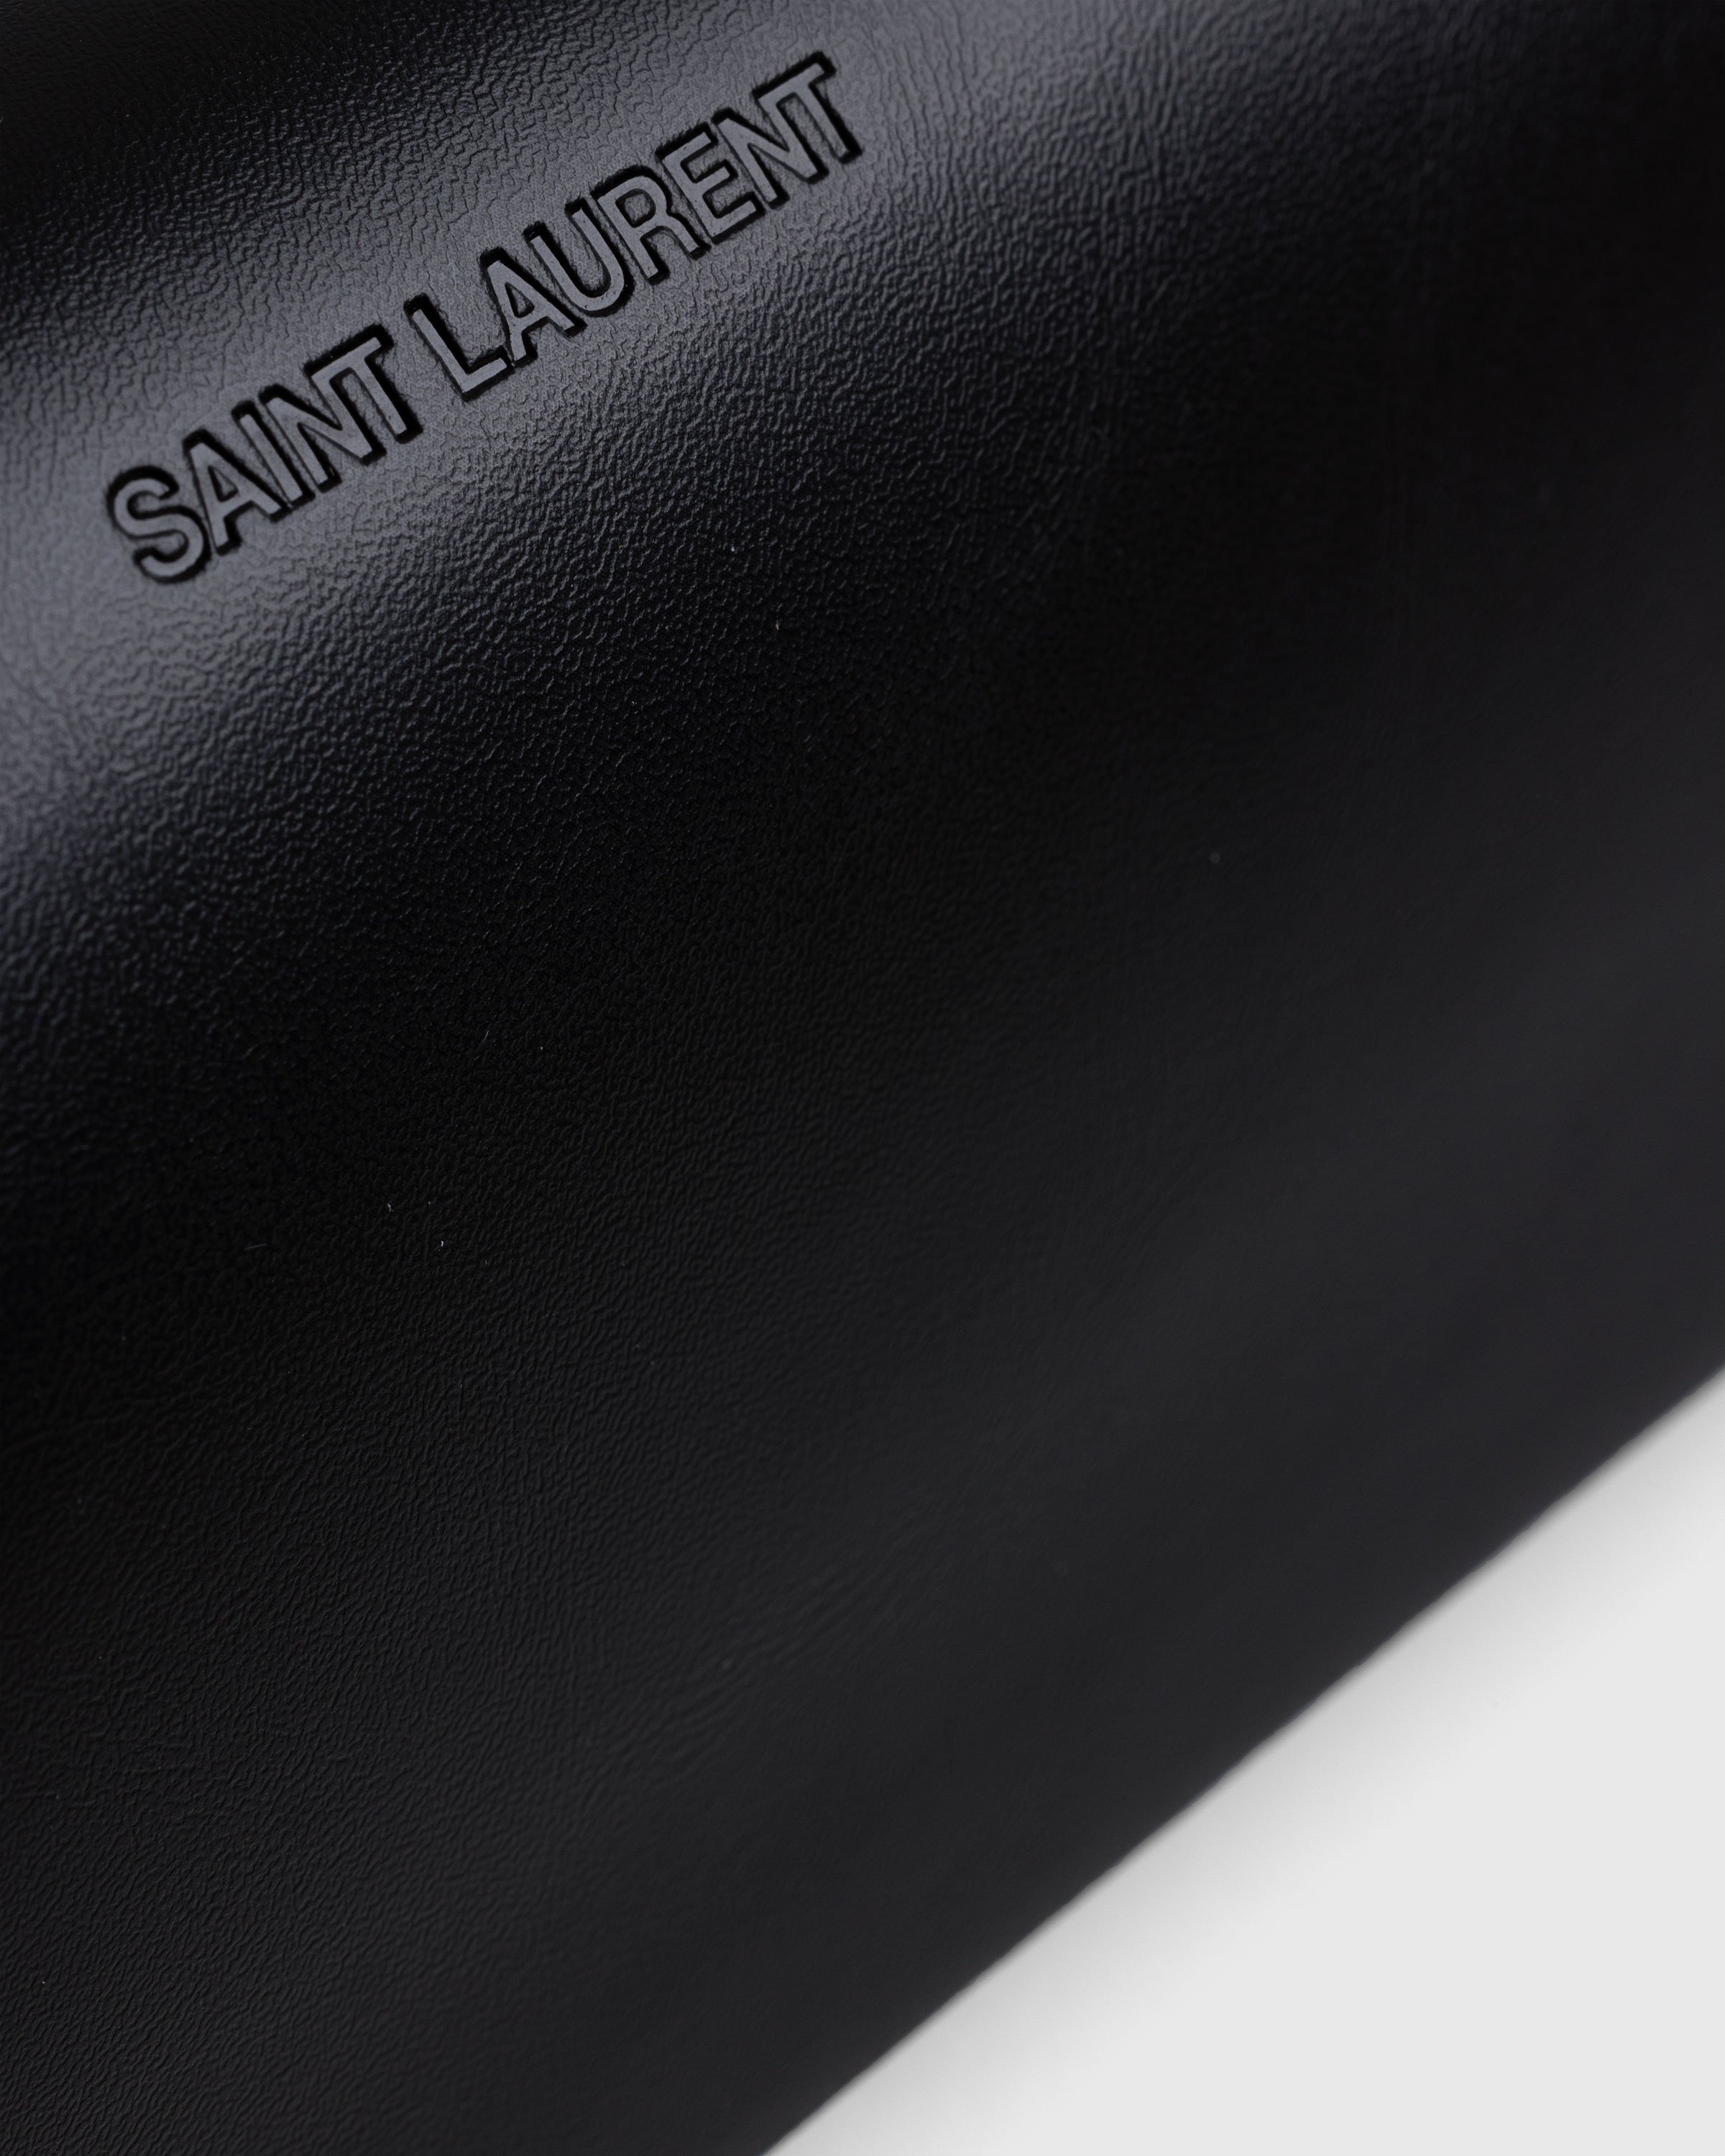 Saint Laurent - SL 572 Square Frame Sunglasses Black/Crystal - Accessories - Multi - Image 6